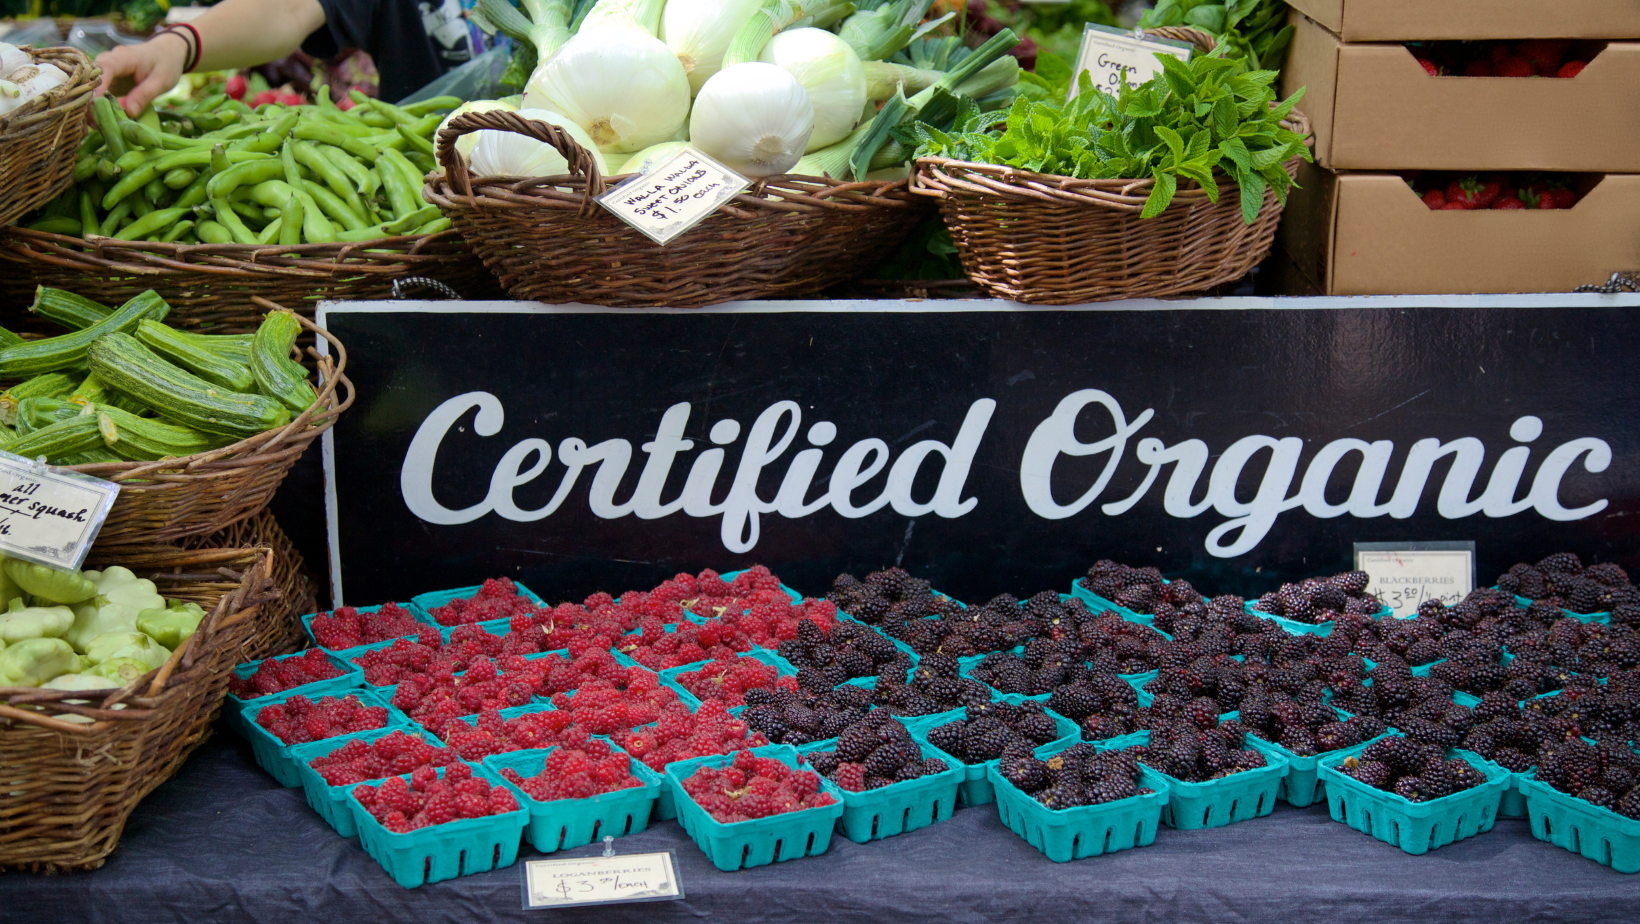 Organic cost share certification program